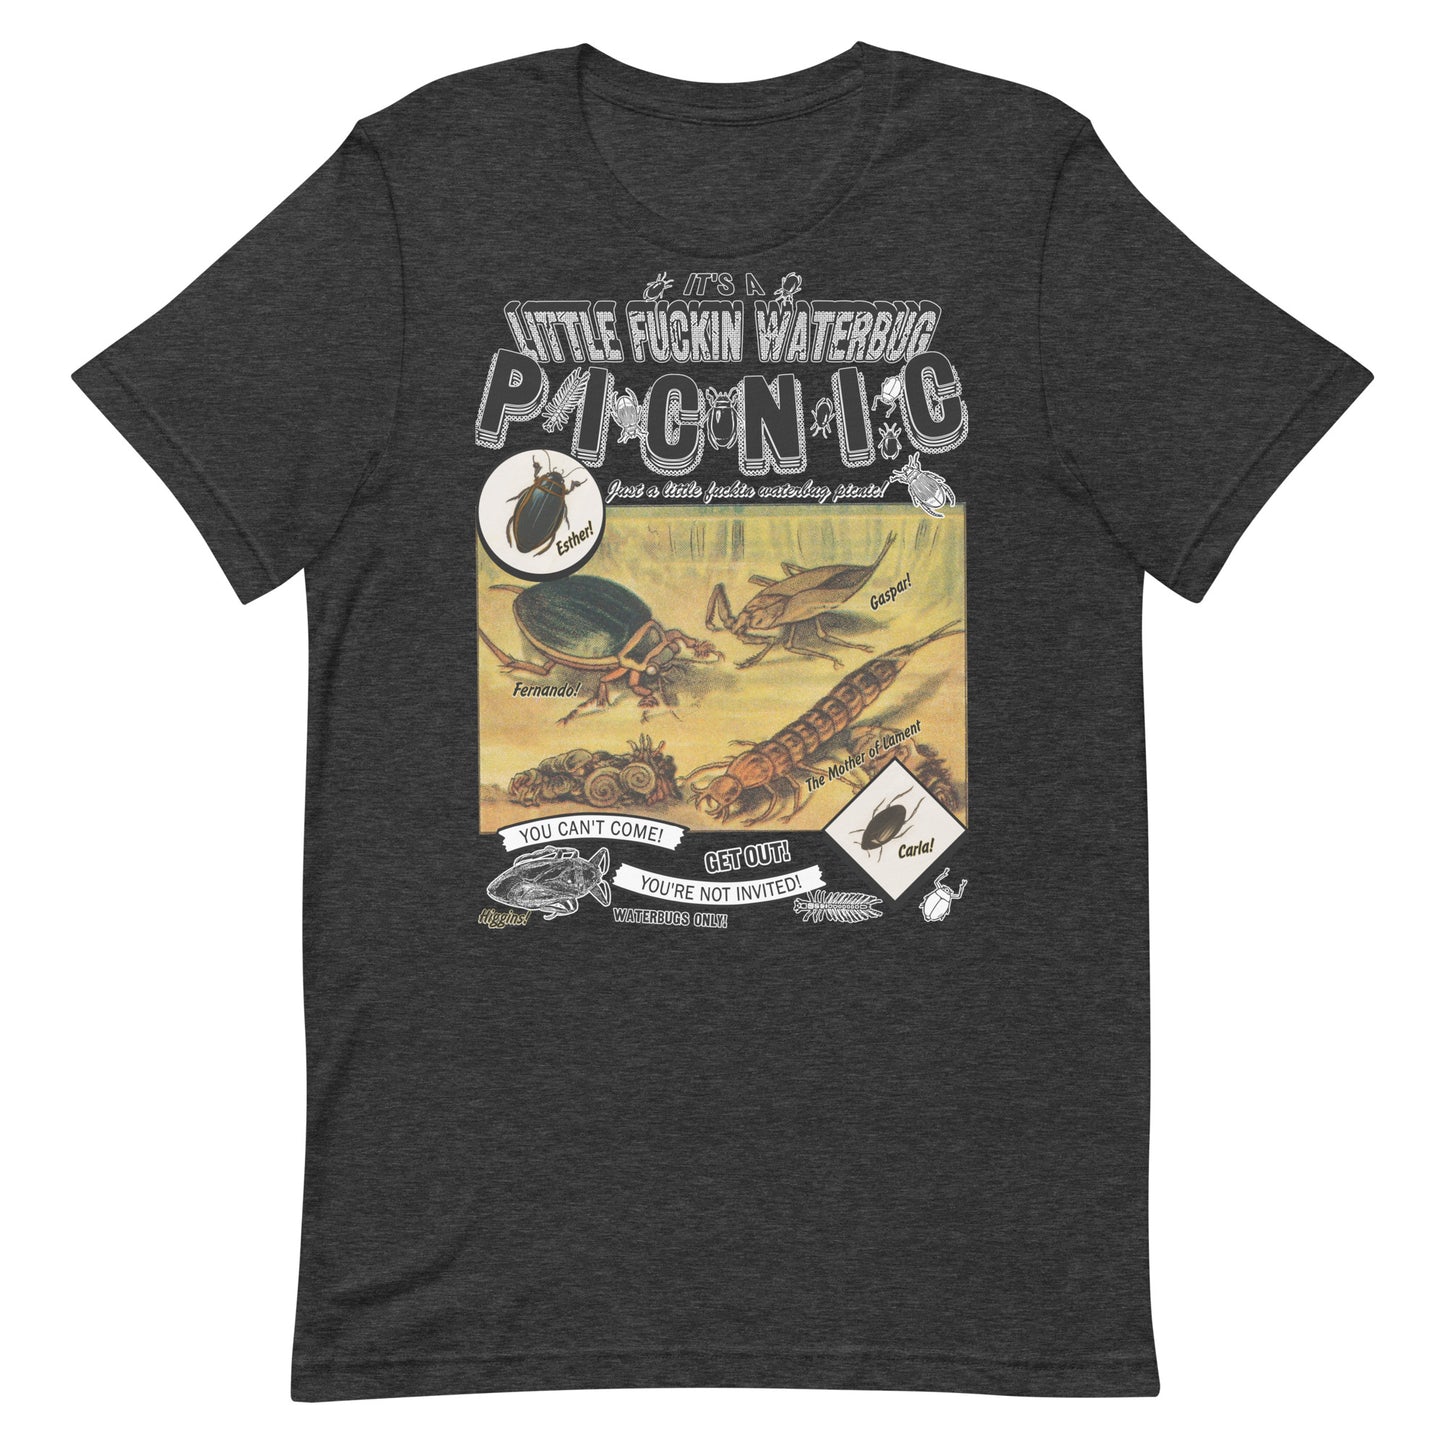 "Waterbug Picnic" Unisex t-shirt